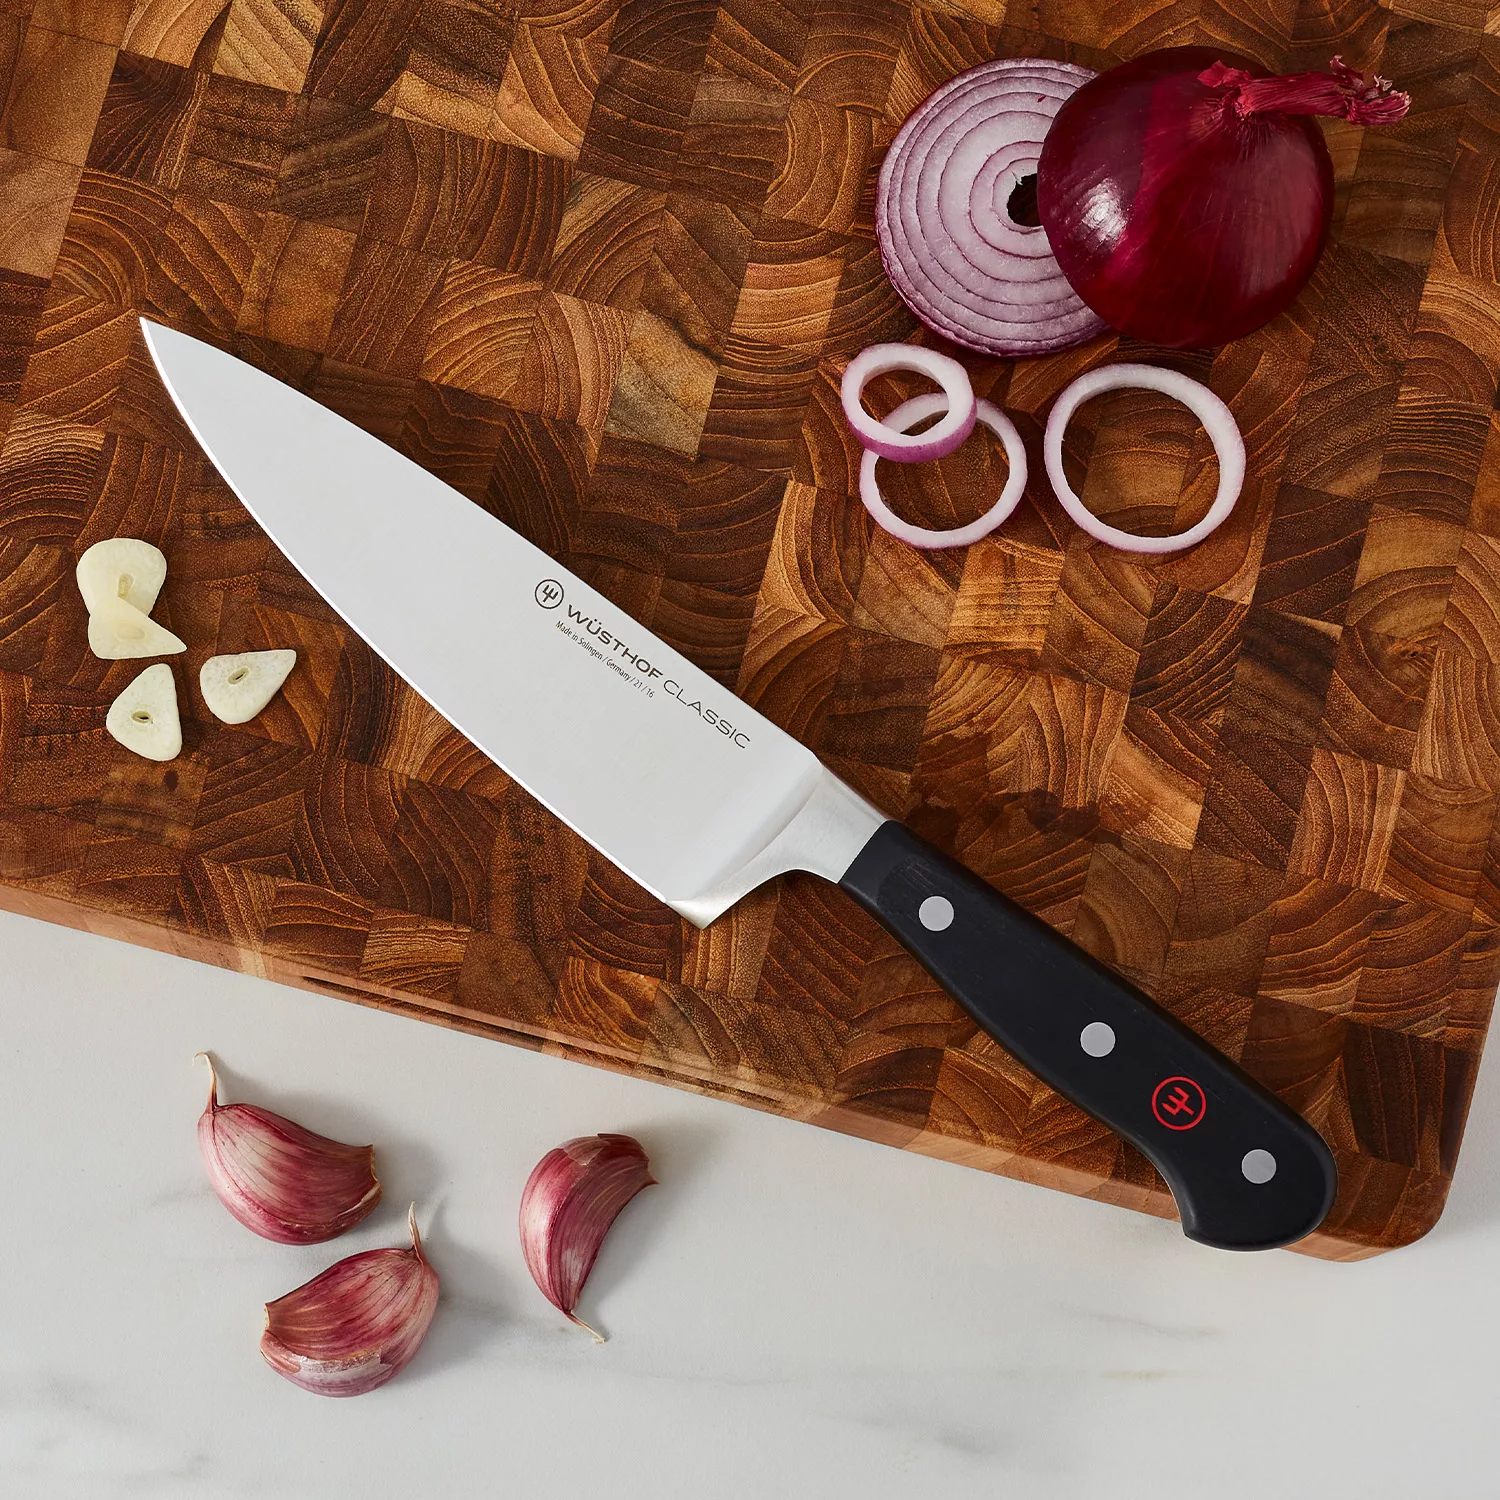 CLASSIC 6'' Chef Knife